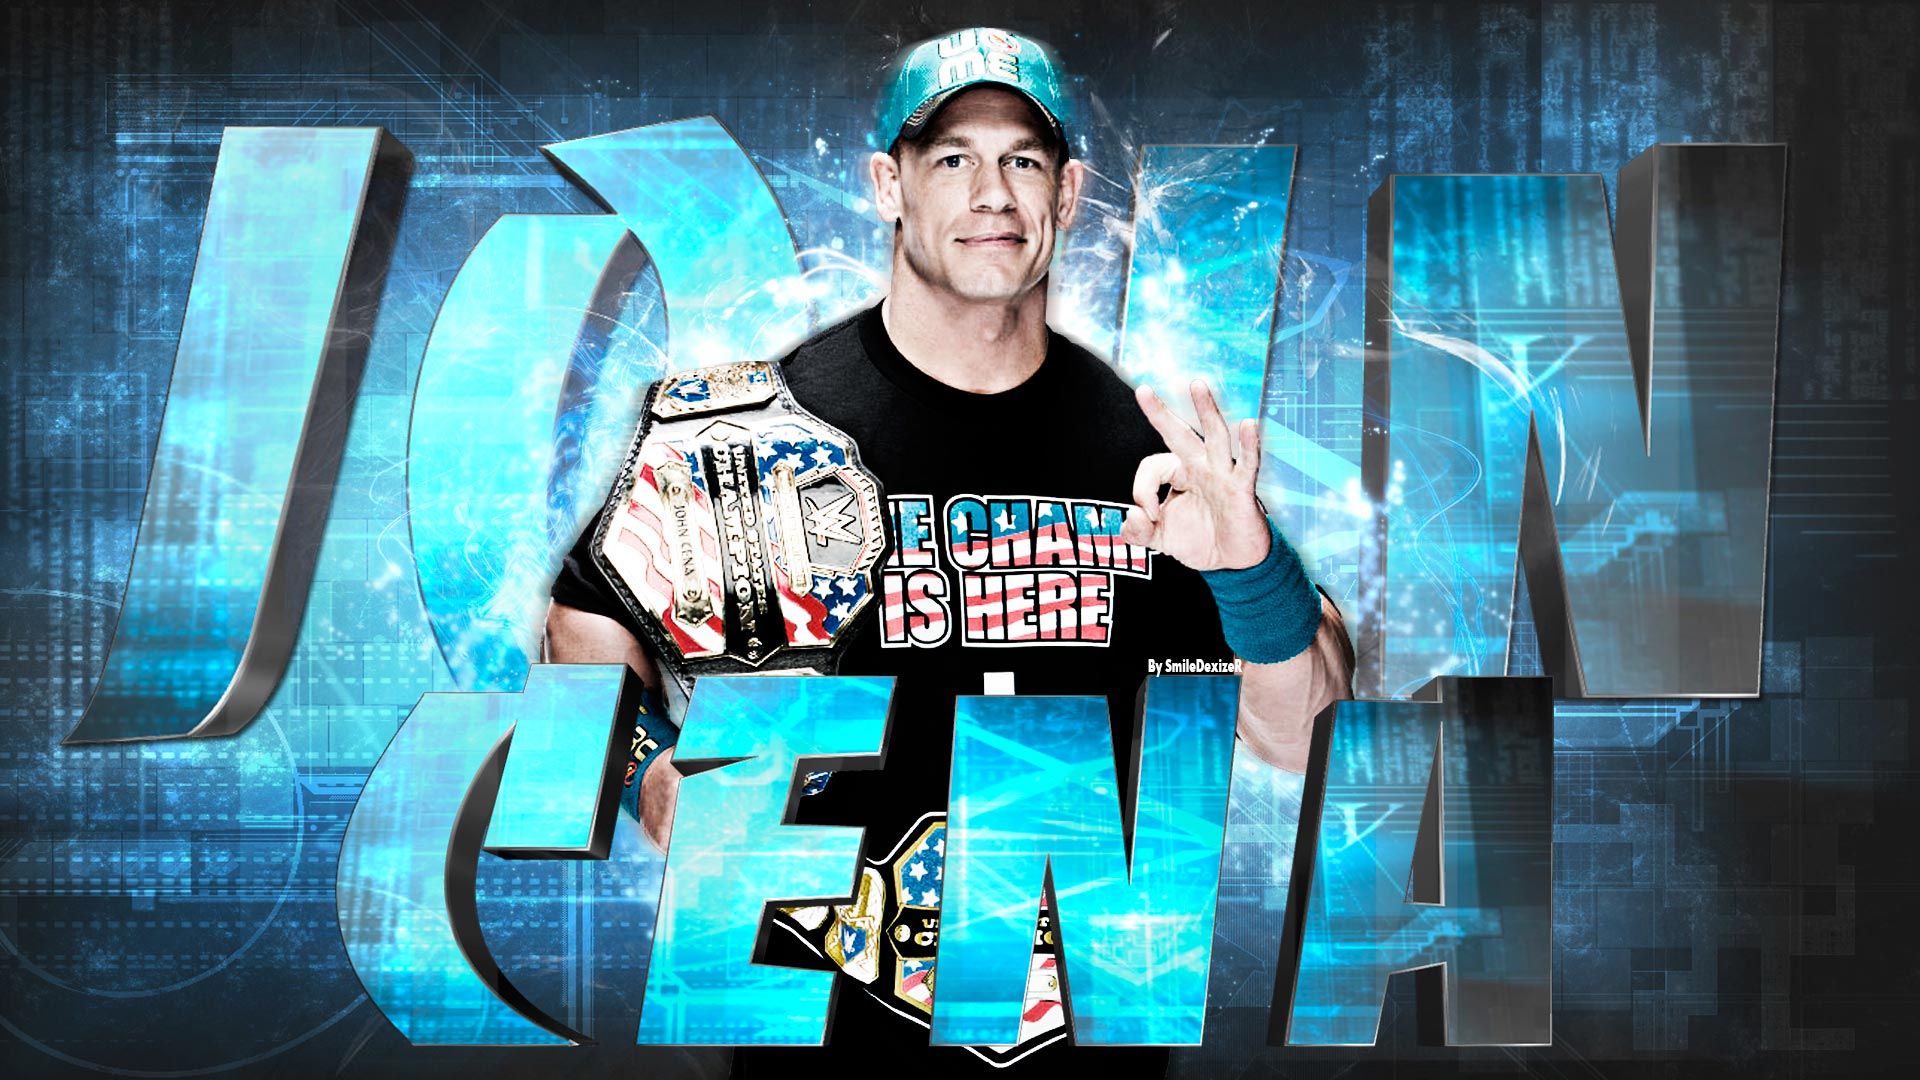 WWE John Cena Wallpaper by SmileDexizeR on DeviantArt